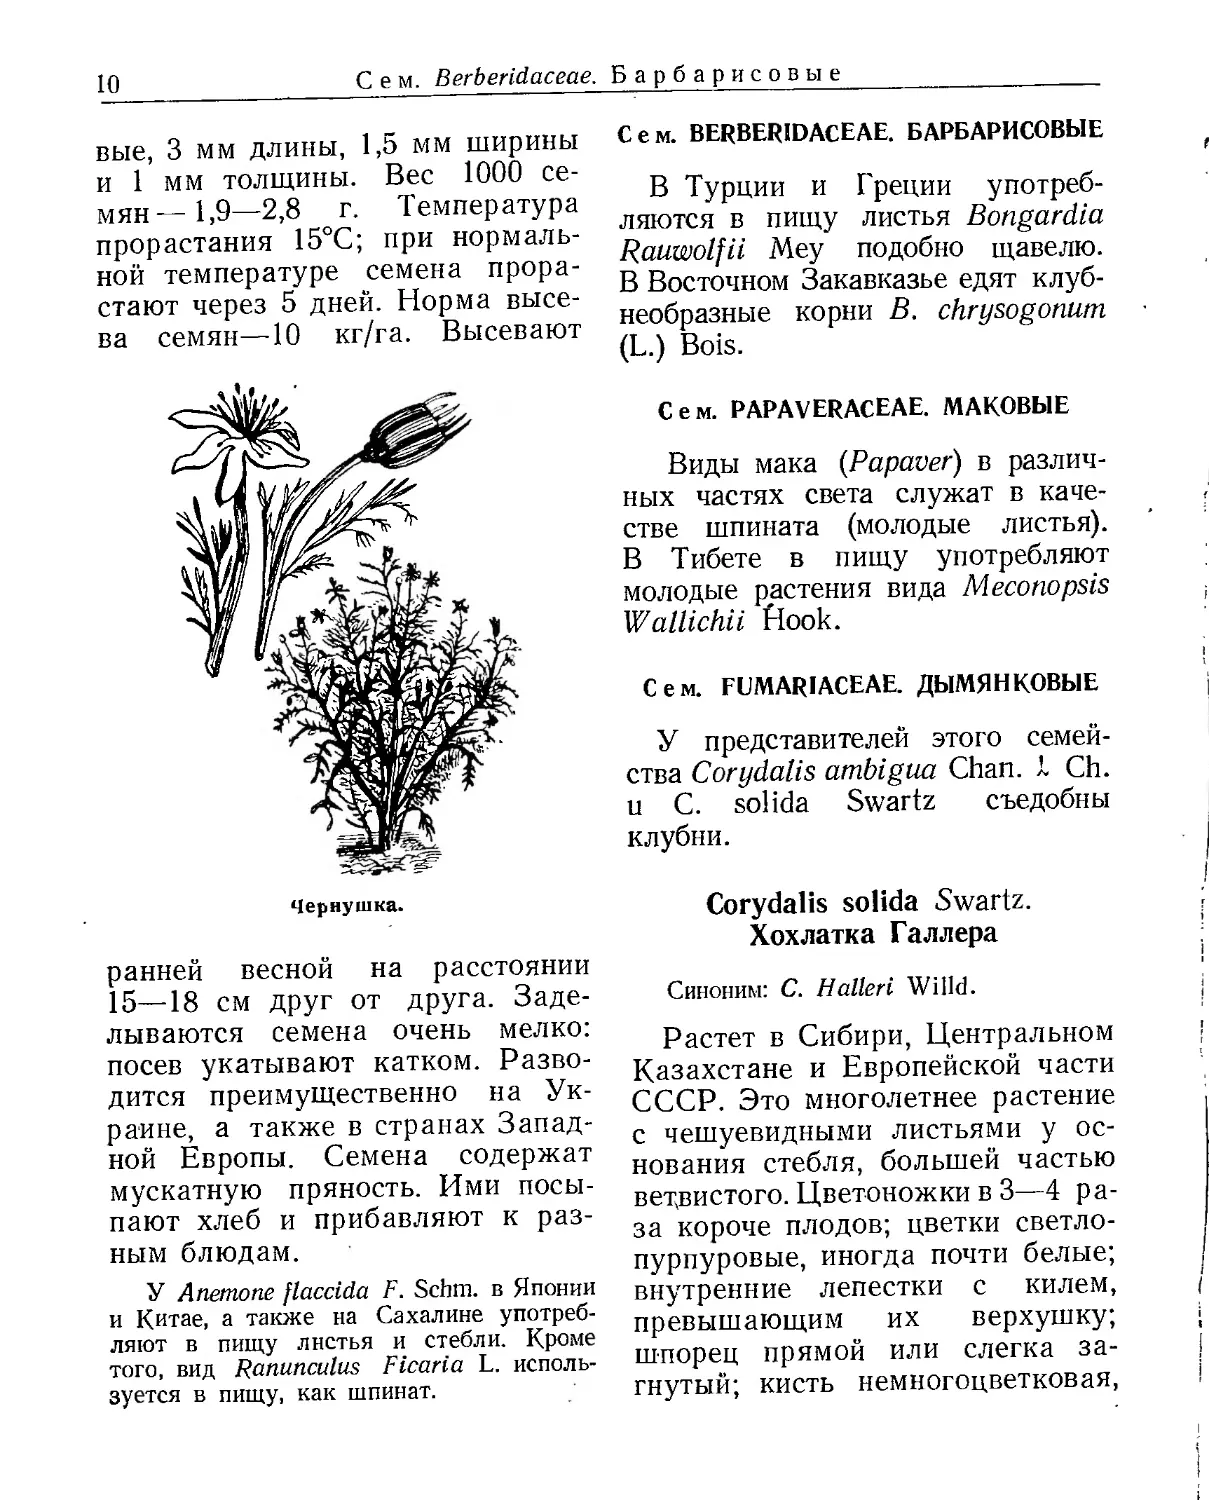 Сем. Berberidaceae. Барбарисовые
Сем. Papaveraceae. Маковые
Сем. Fumariaceae. Дымянковые